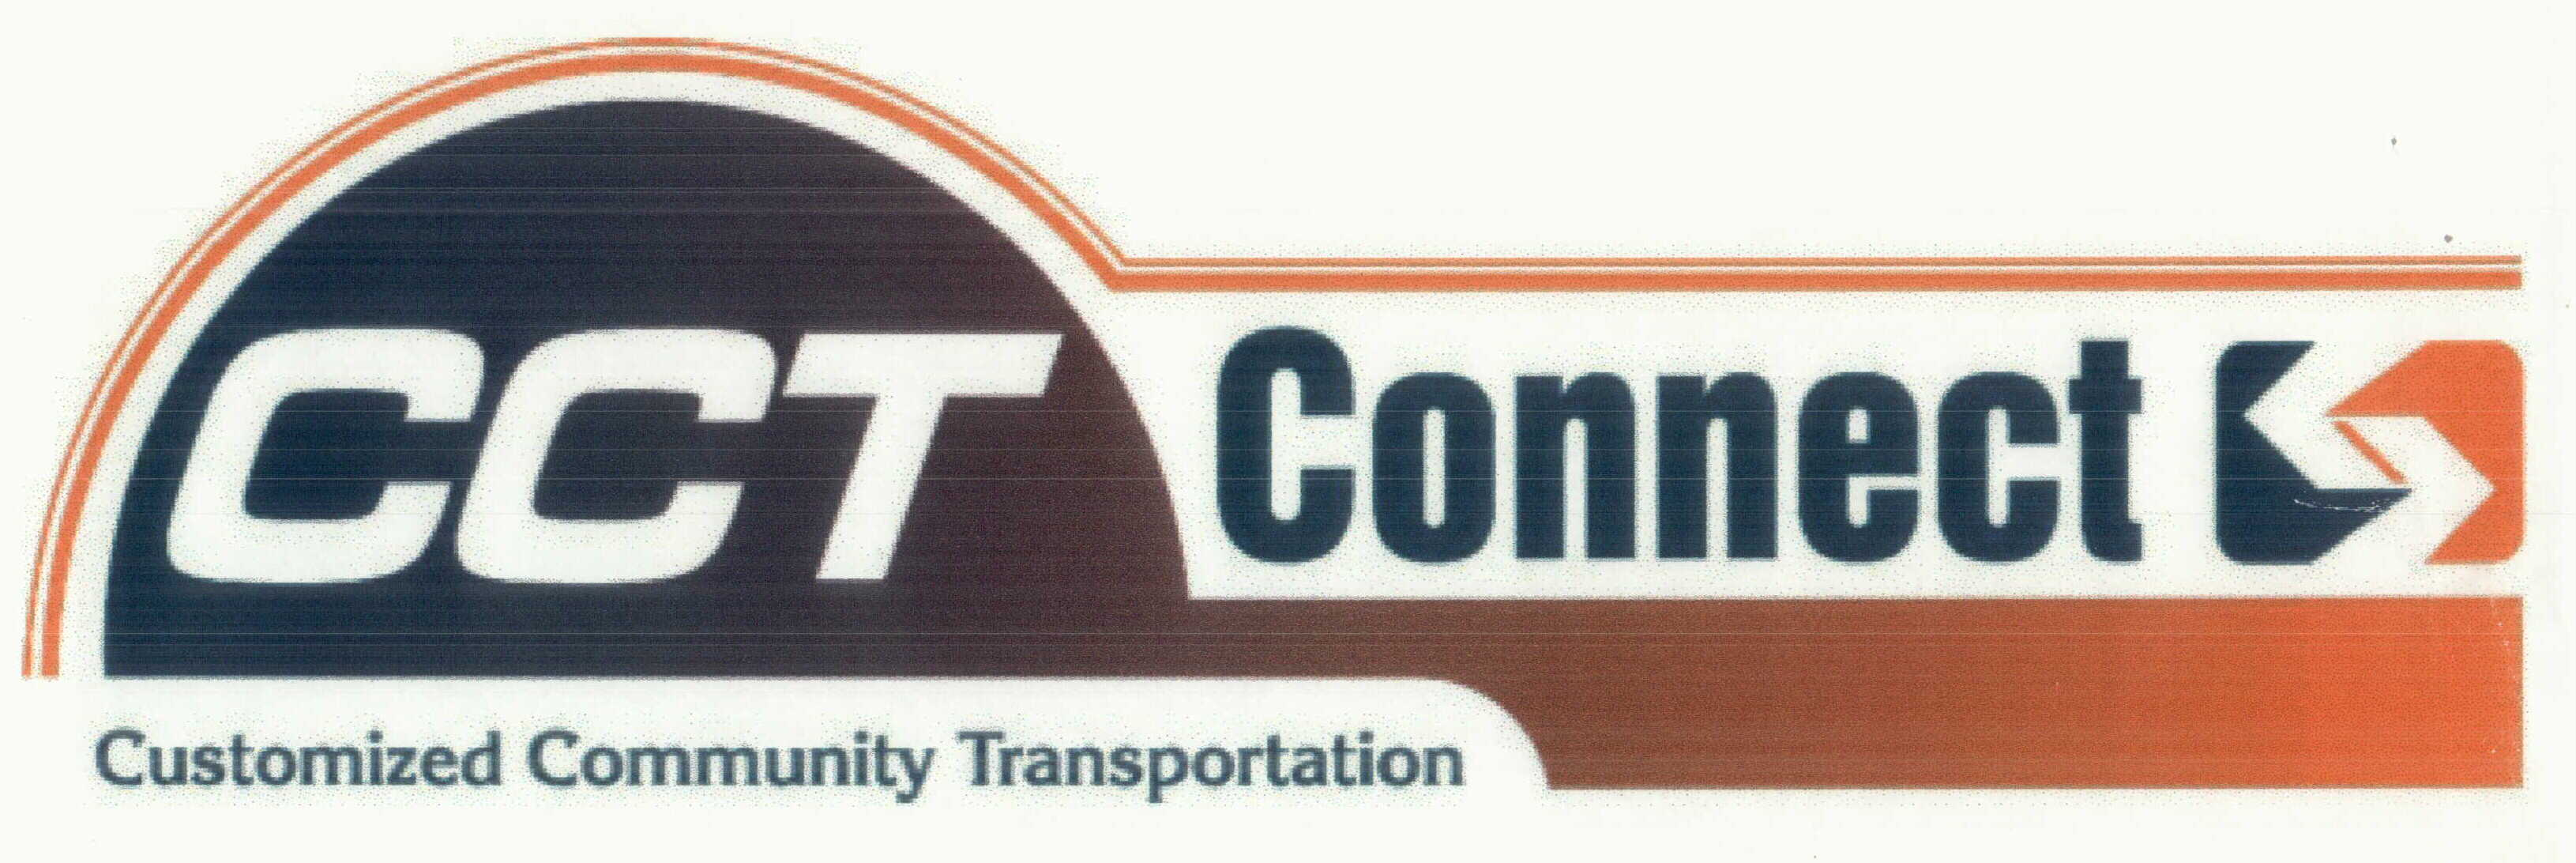  CCT CONNECT CUSTOMIZED COMMUNITY TRANSPORTATION